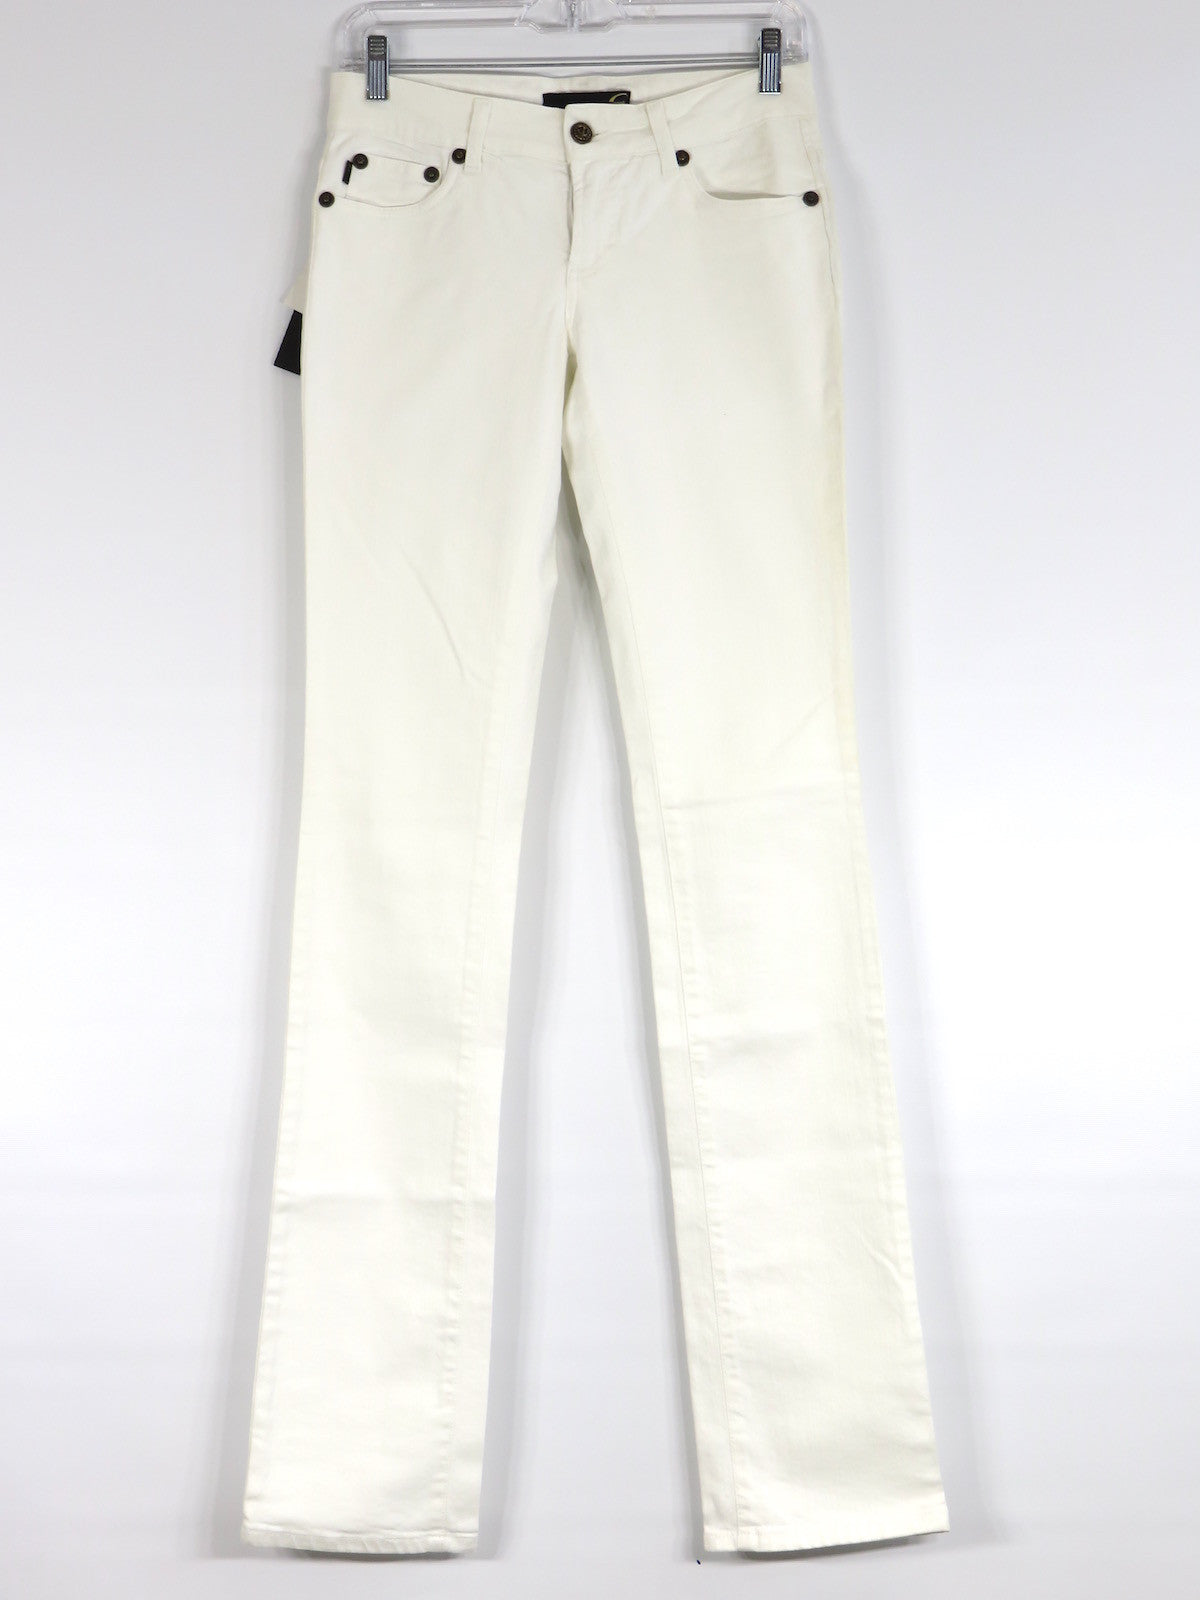 white slim jeans womens